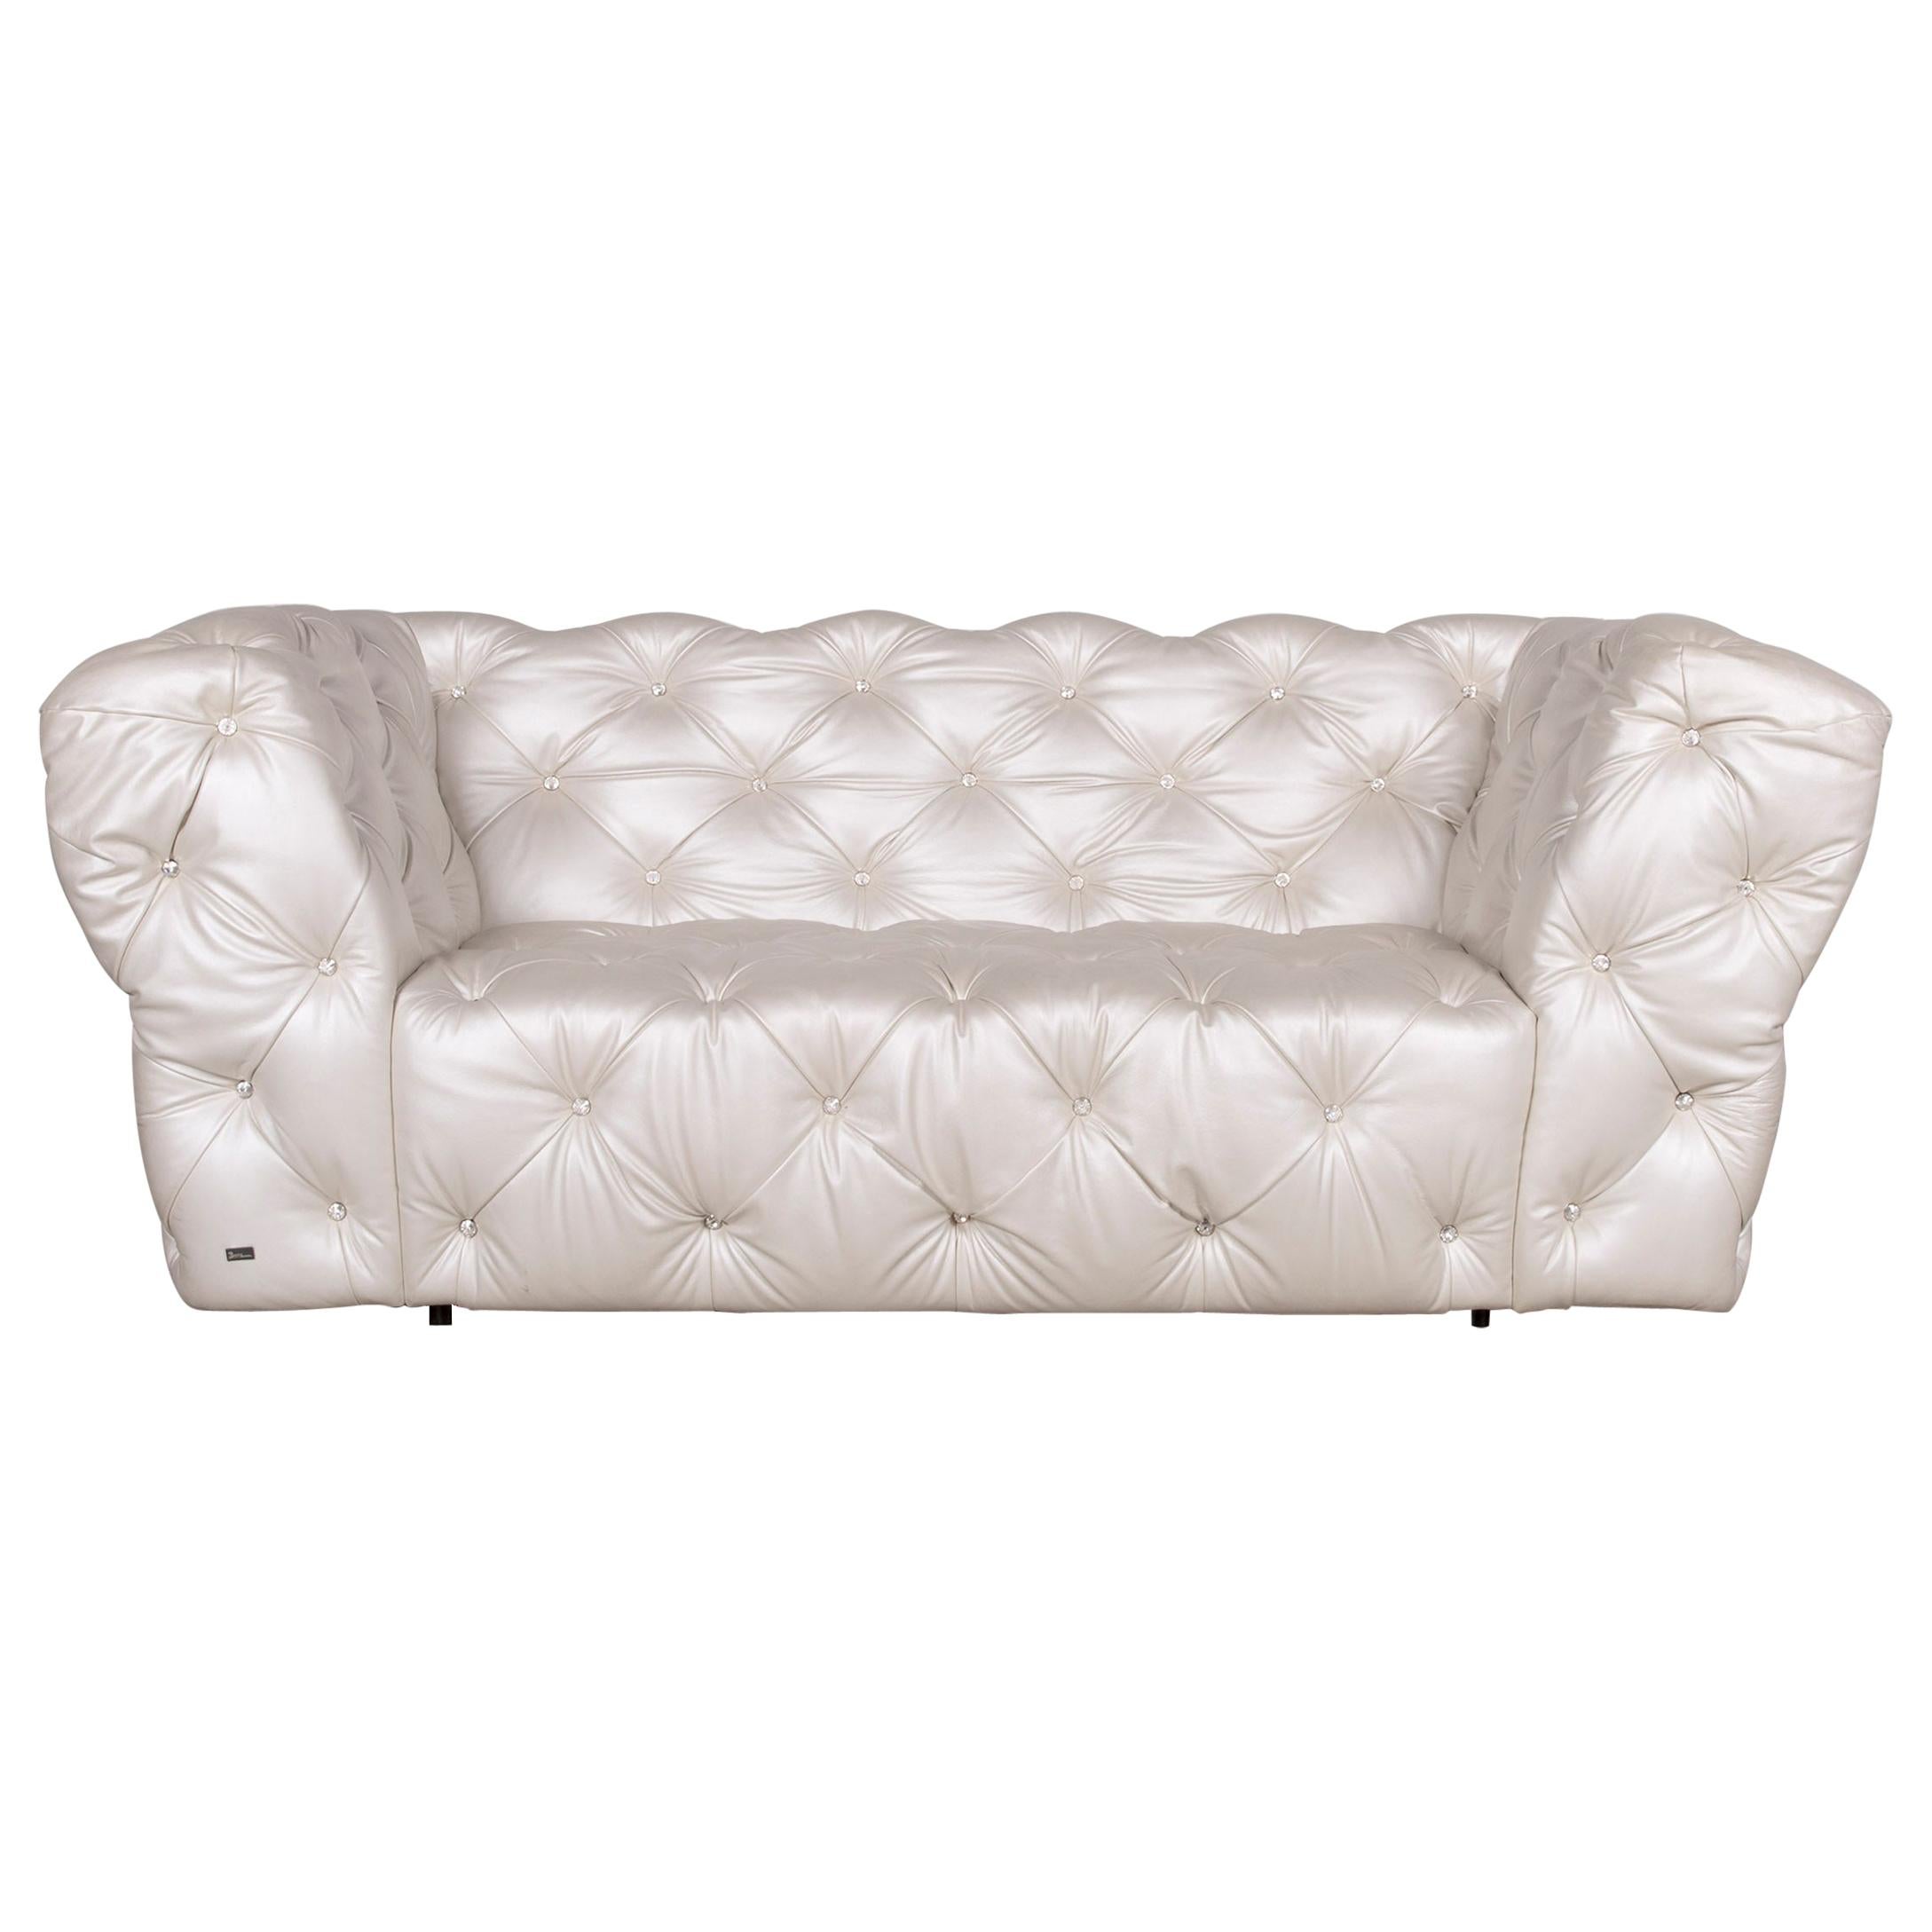 Bretz Marilyn Designer Leather Sofa Cream Ivory Genuine Leather Three-Seat